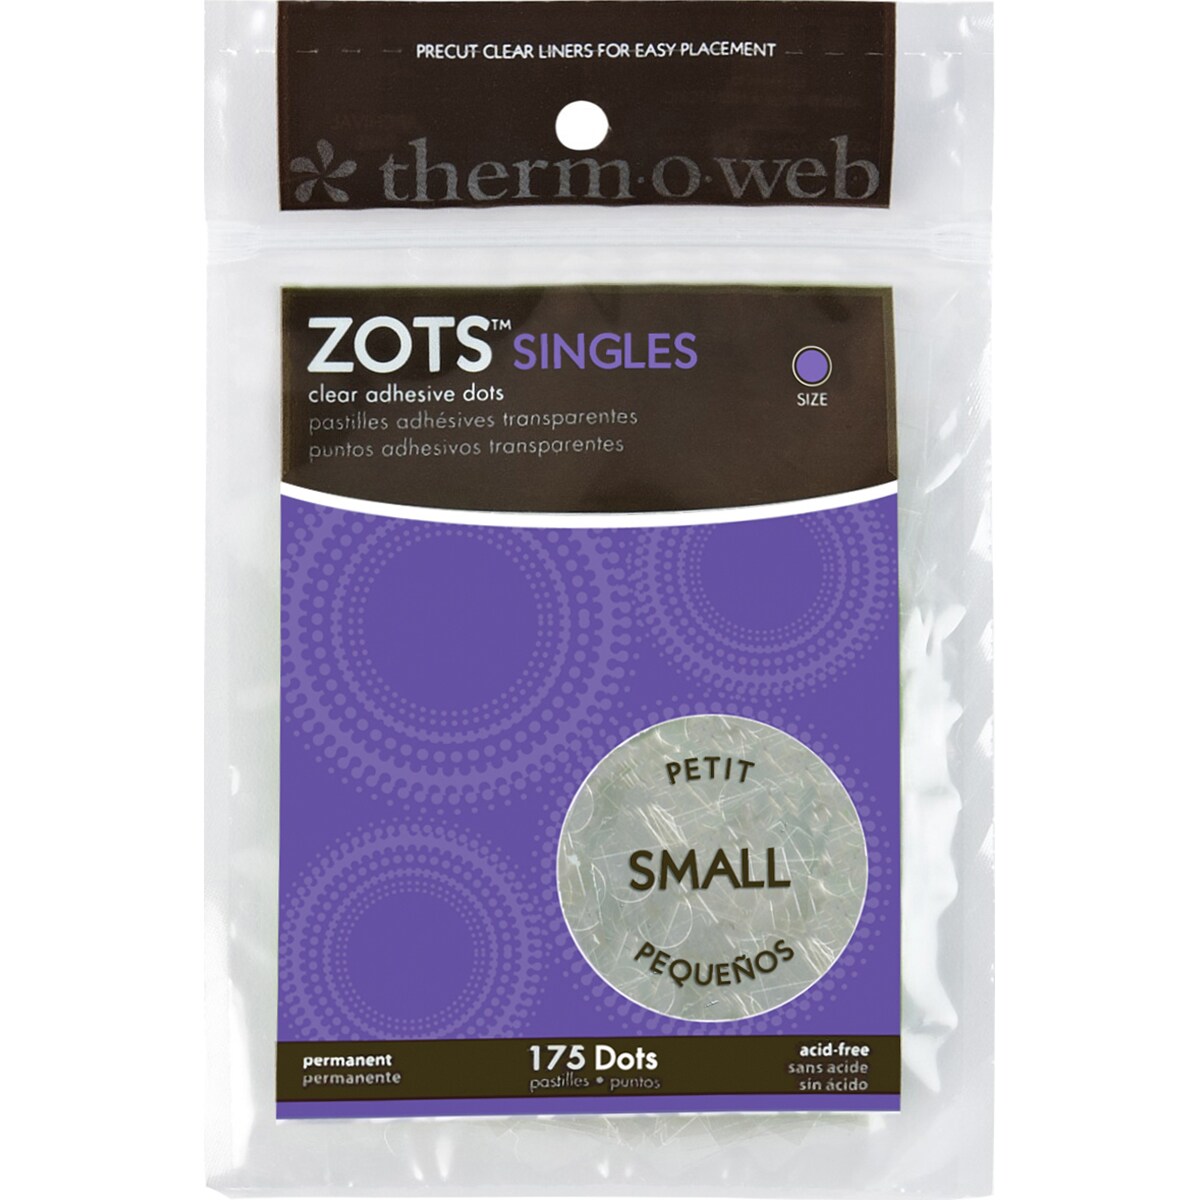 Zots Singles Clear Adhesive Dots Small